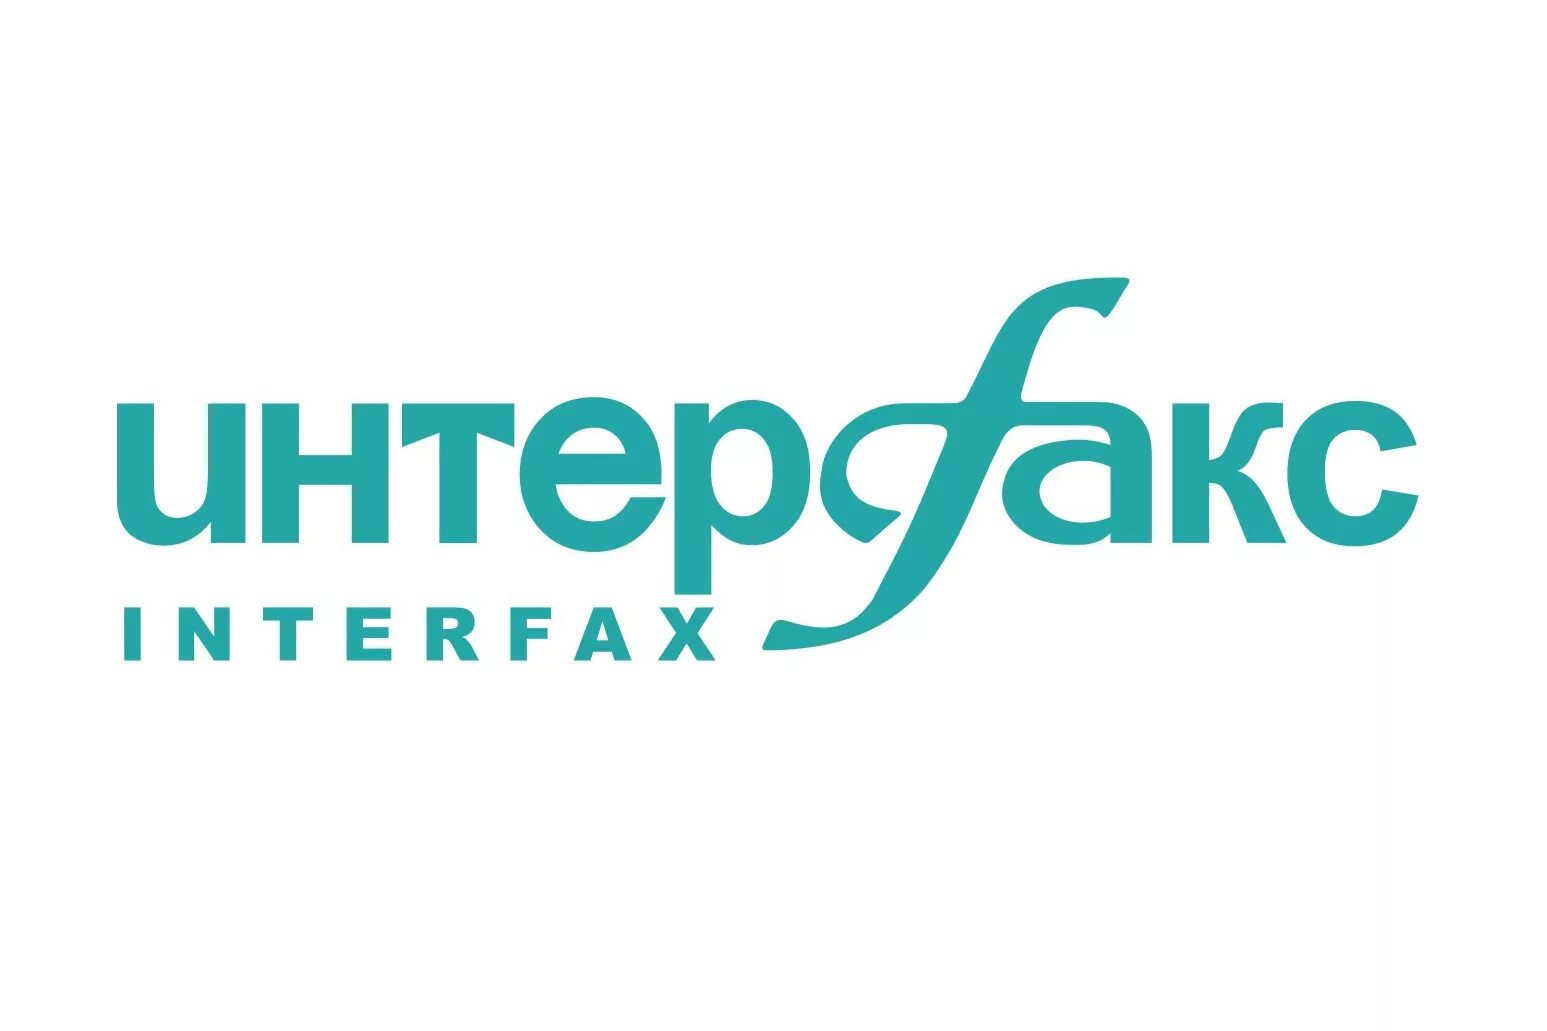 Интерфакс риа новости. Интерфакс логотип. Информационное агентство Интерфакс. Прозрачная эмблема Интерфакс. Interac logotip.